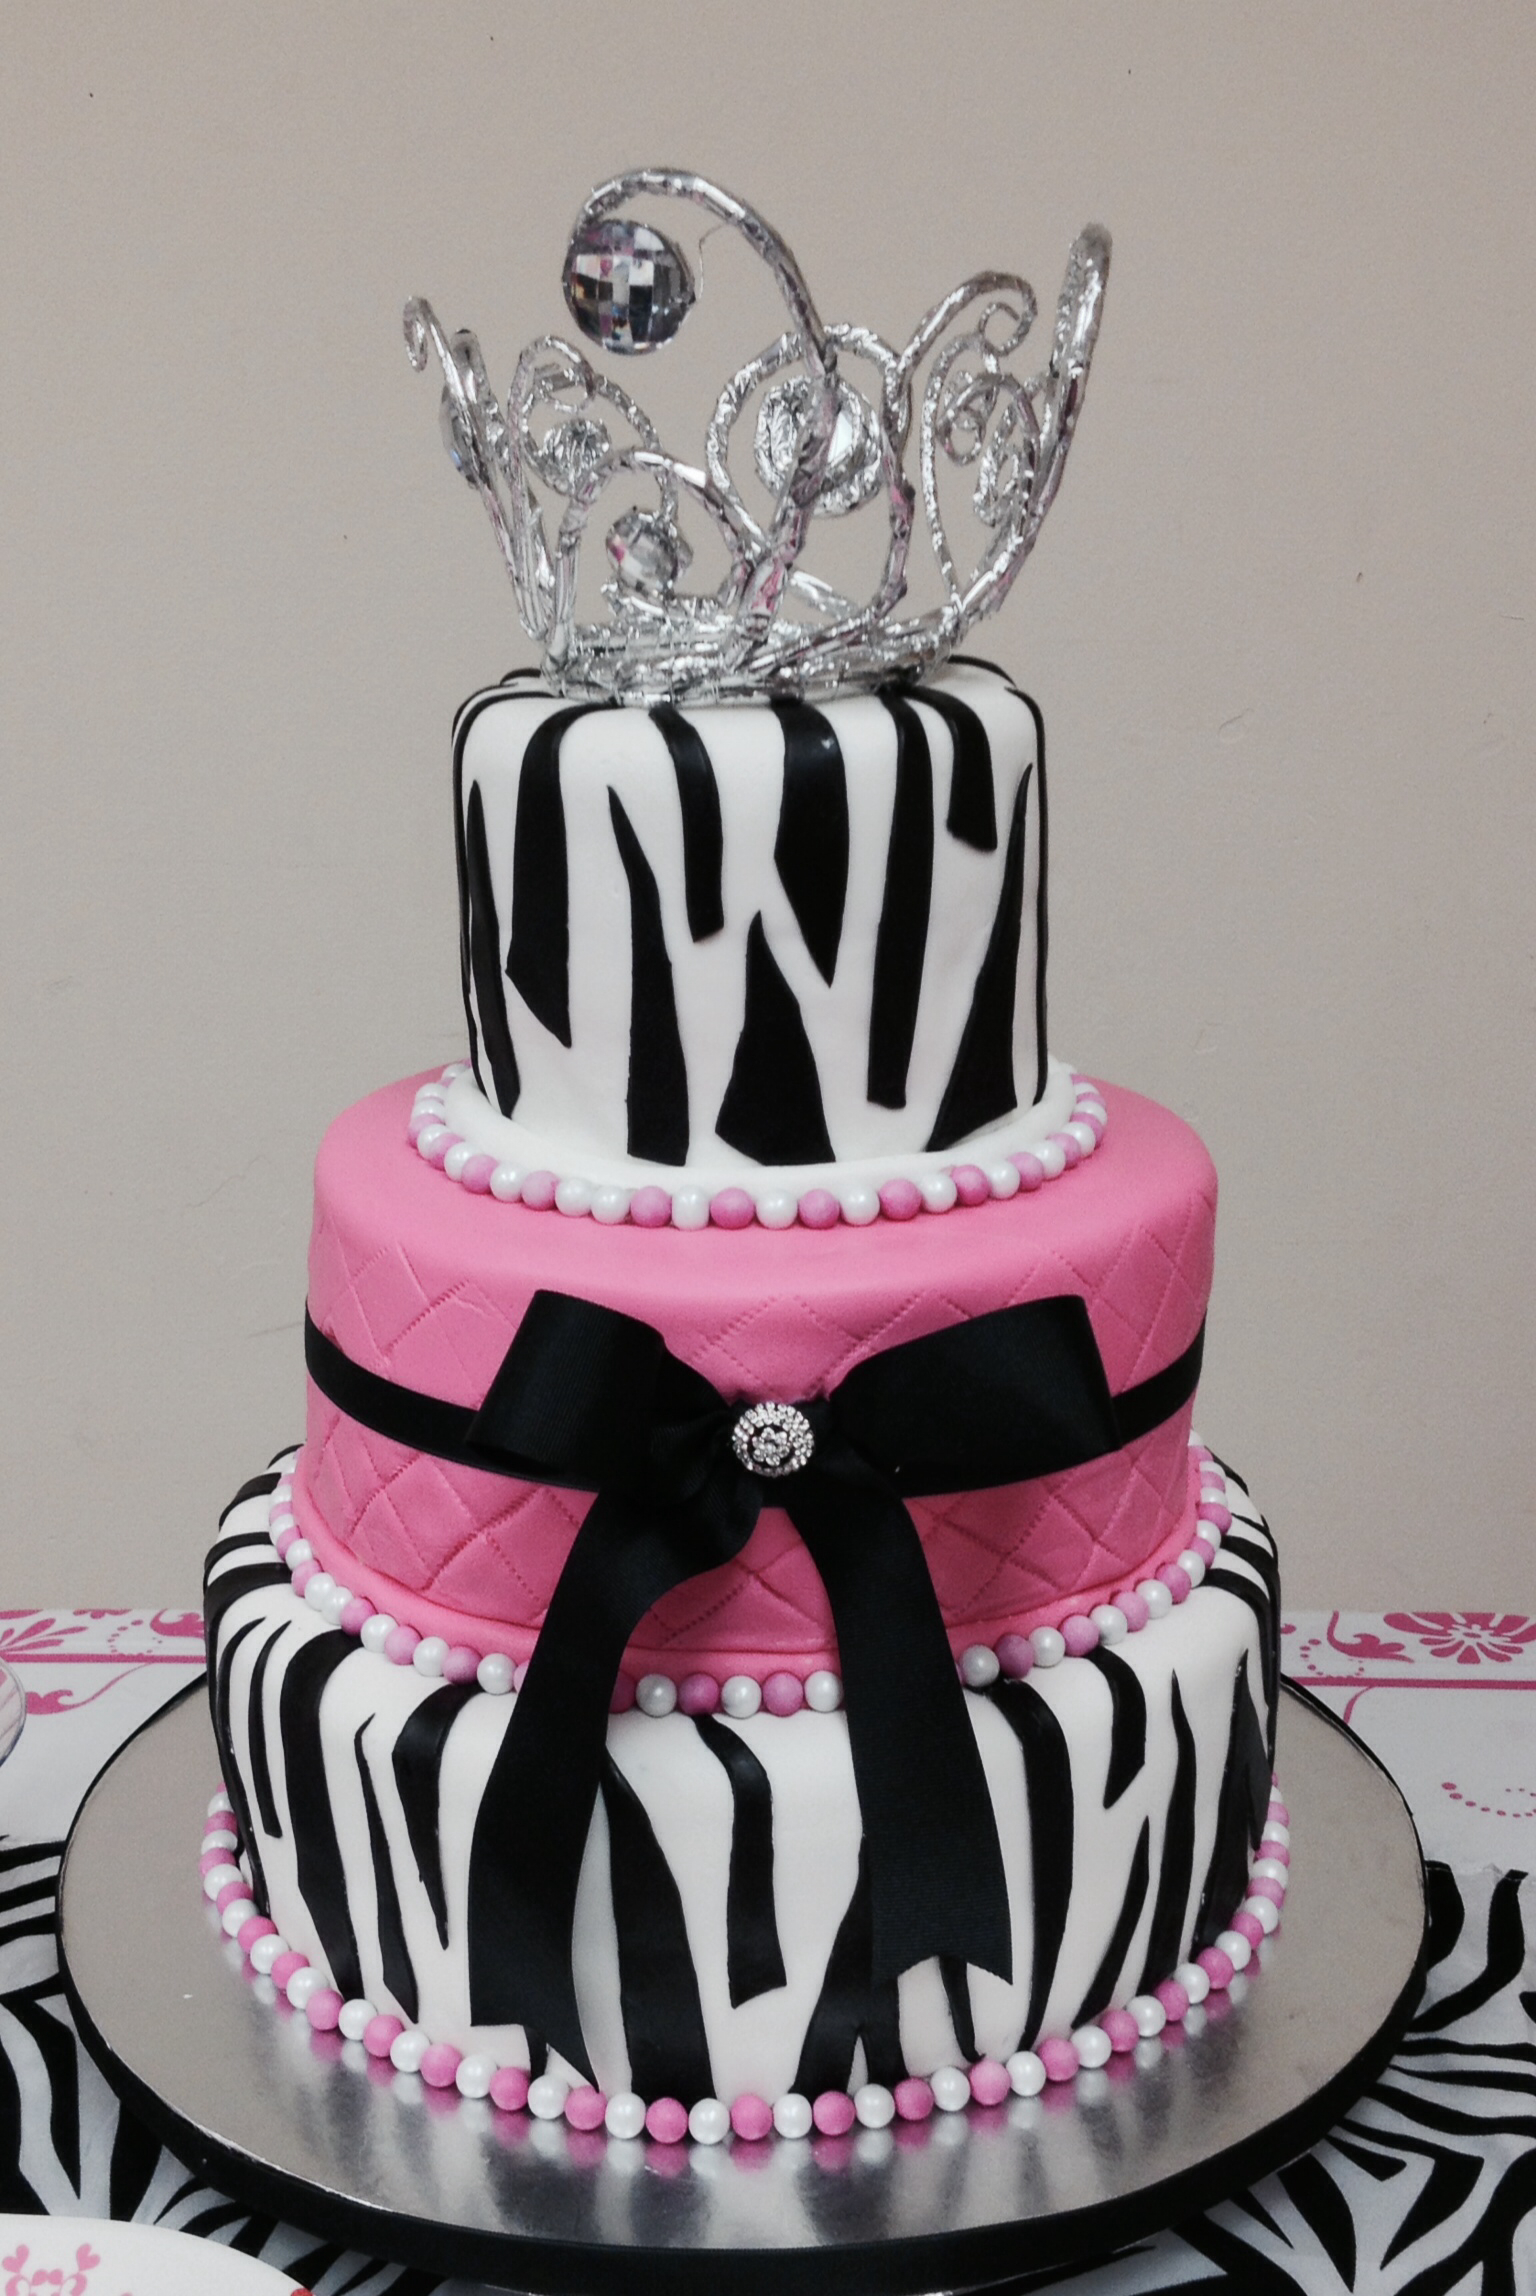 Черно розовый торт. Торт черный с розовым. Черно розовый торт для девочки. Торт черный с розовым для девочки. Черно розовый торт для девушки.